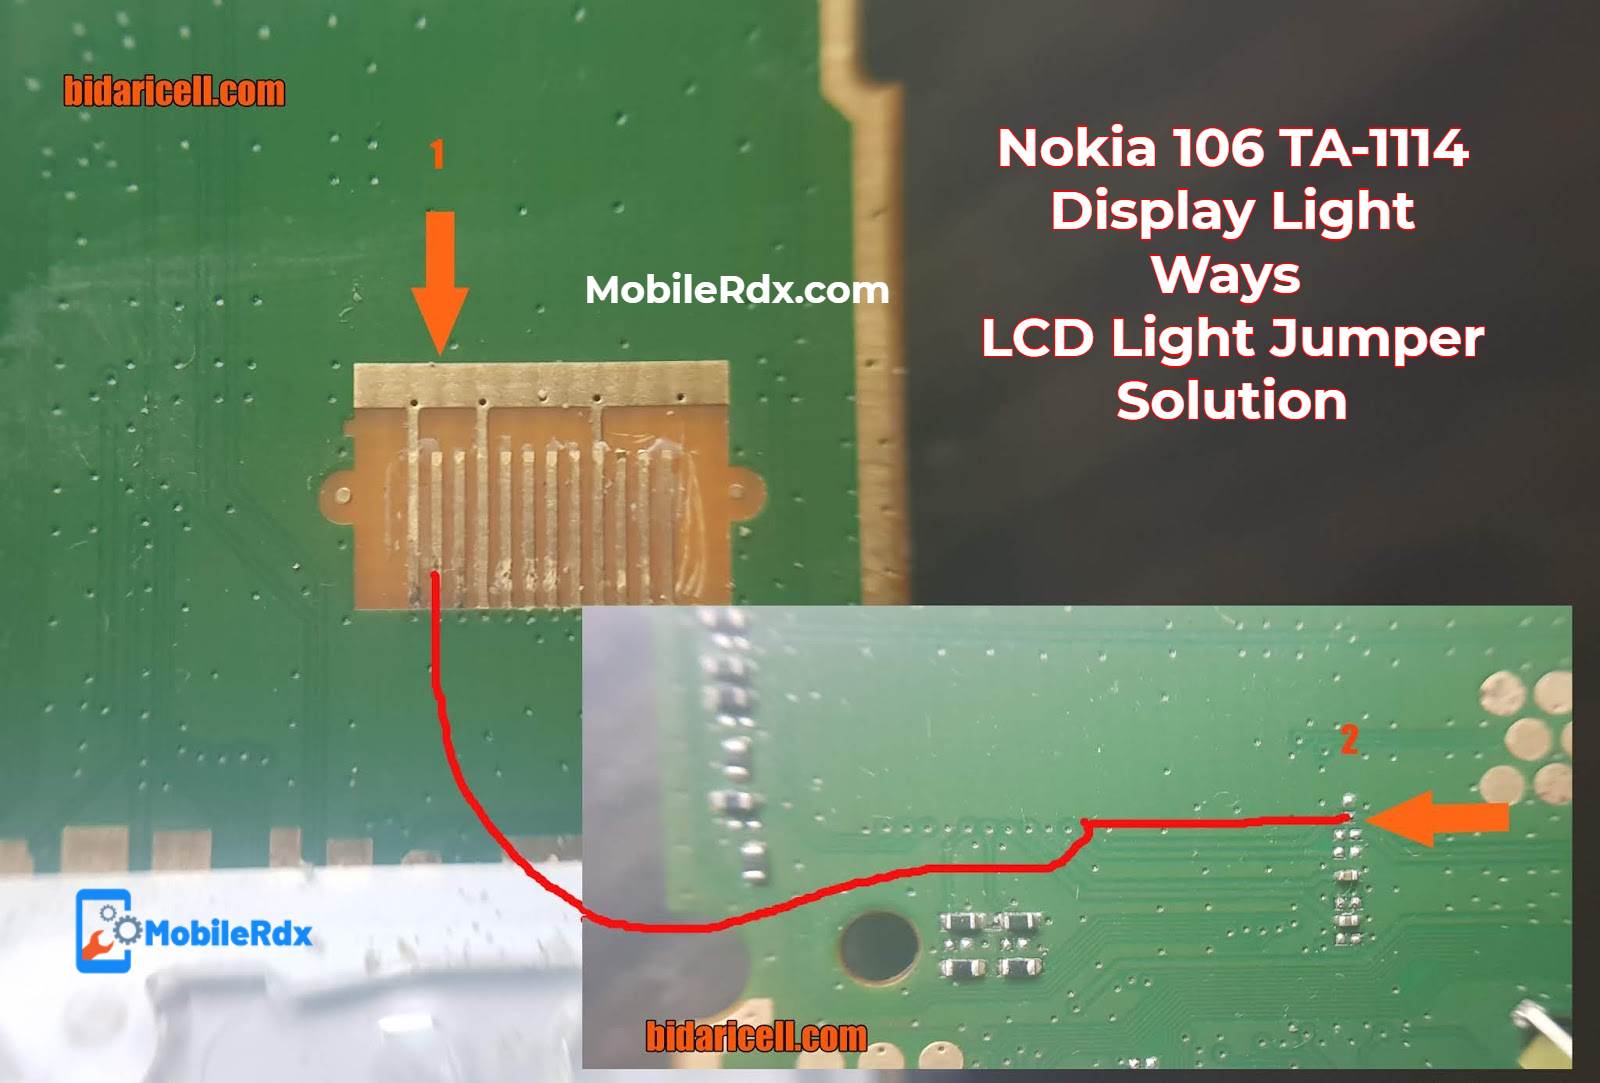 Nokia 106 TA 1114 Display Light Ways LCD Light Jumper